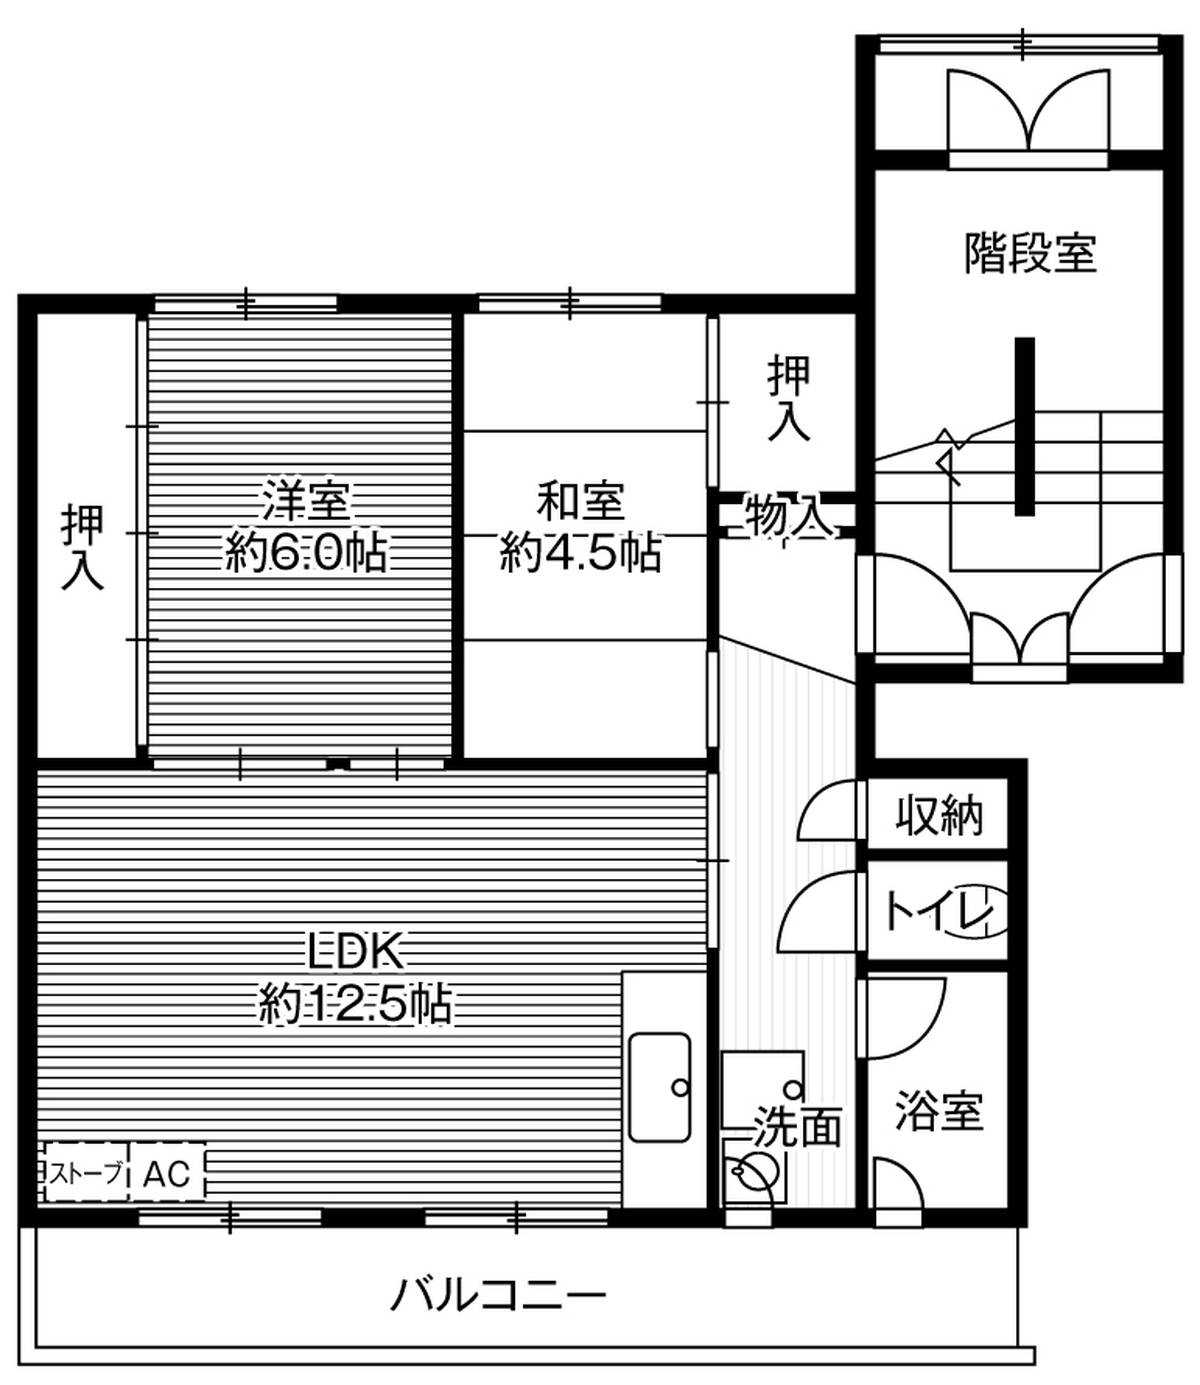 3DK floorplan of Village House Miyanosawa in Teine-ku